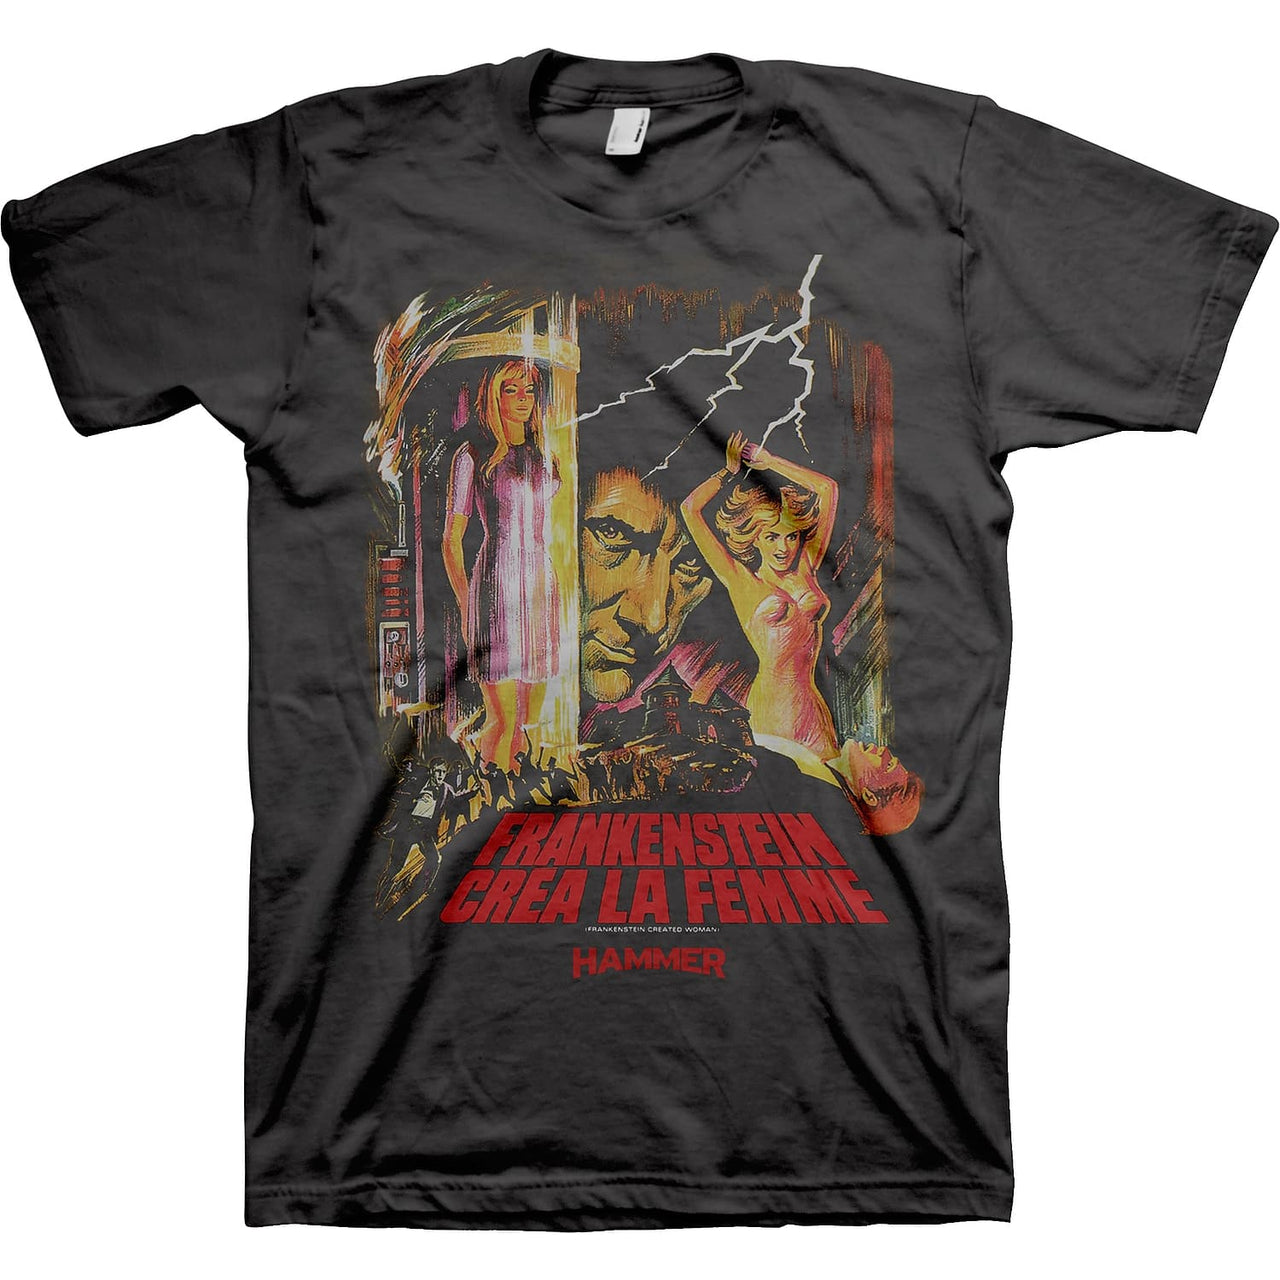 Frankenstein Crea La Femme T-Shirt